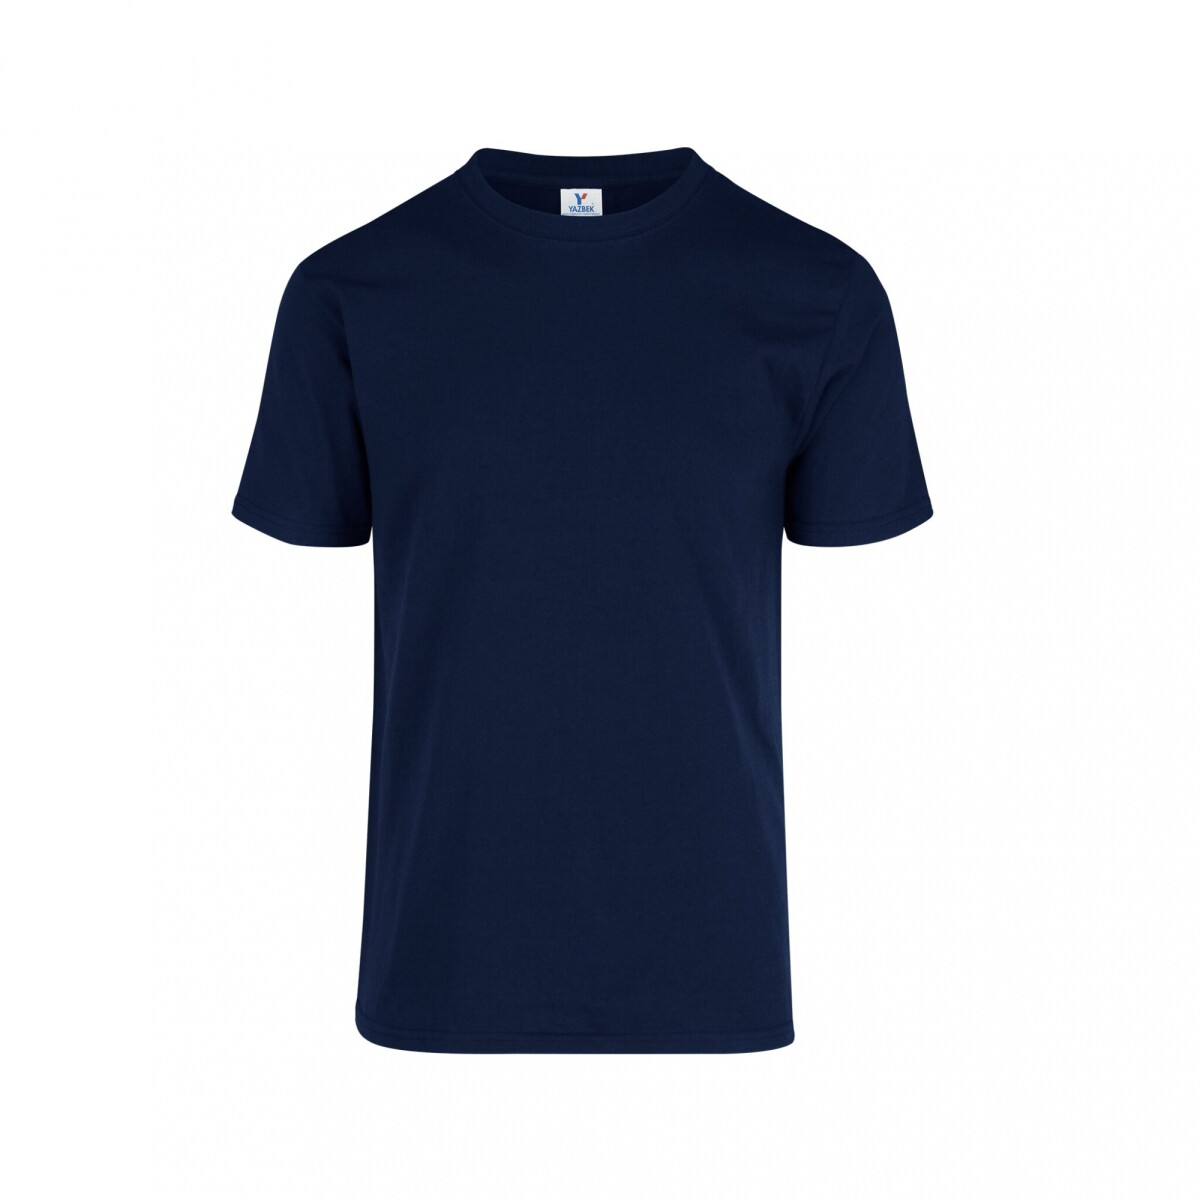 Camiseta a la base peso medio - Azul marino 